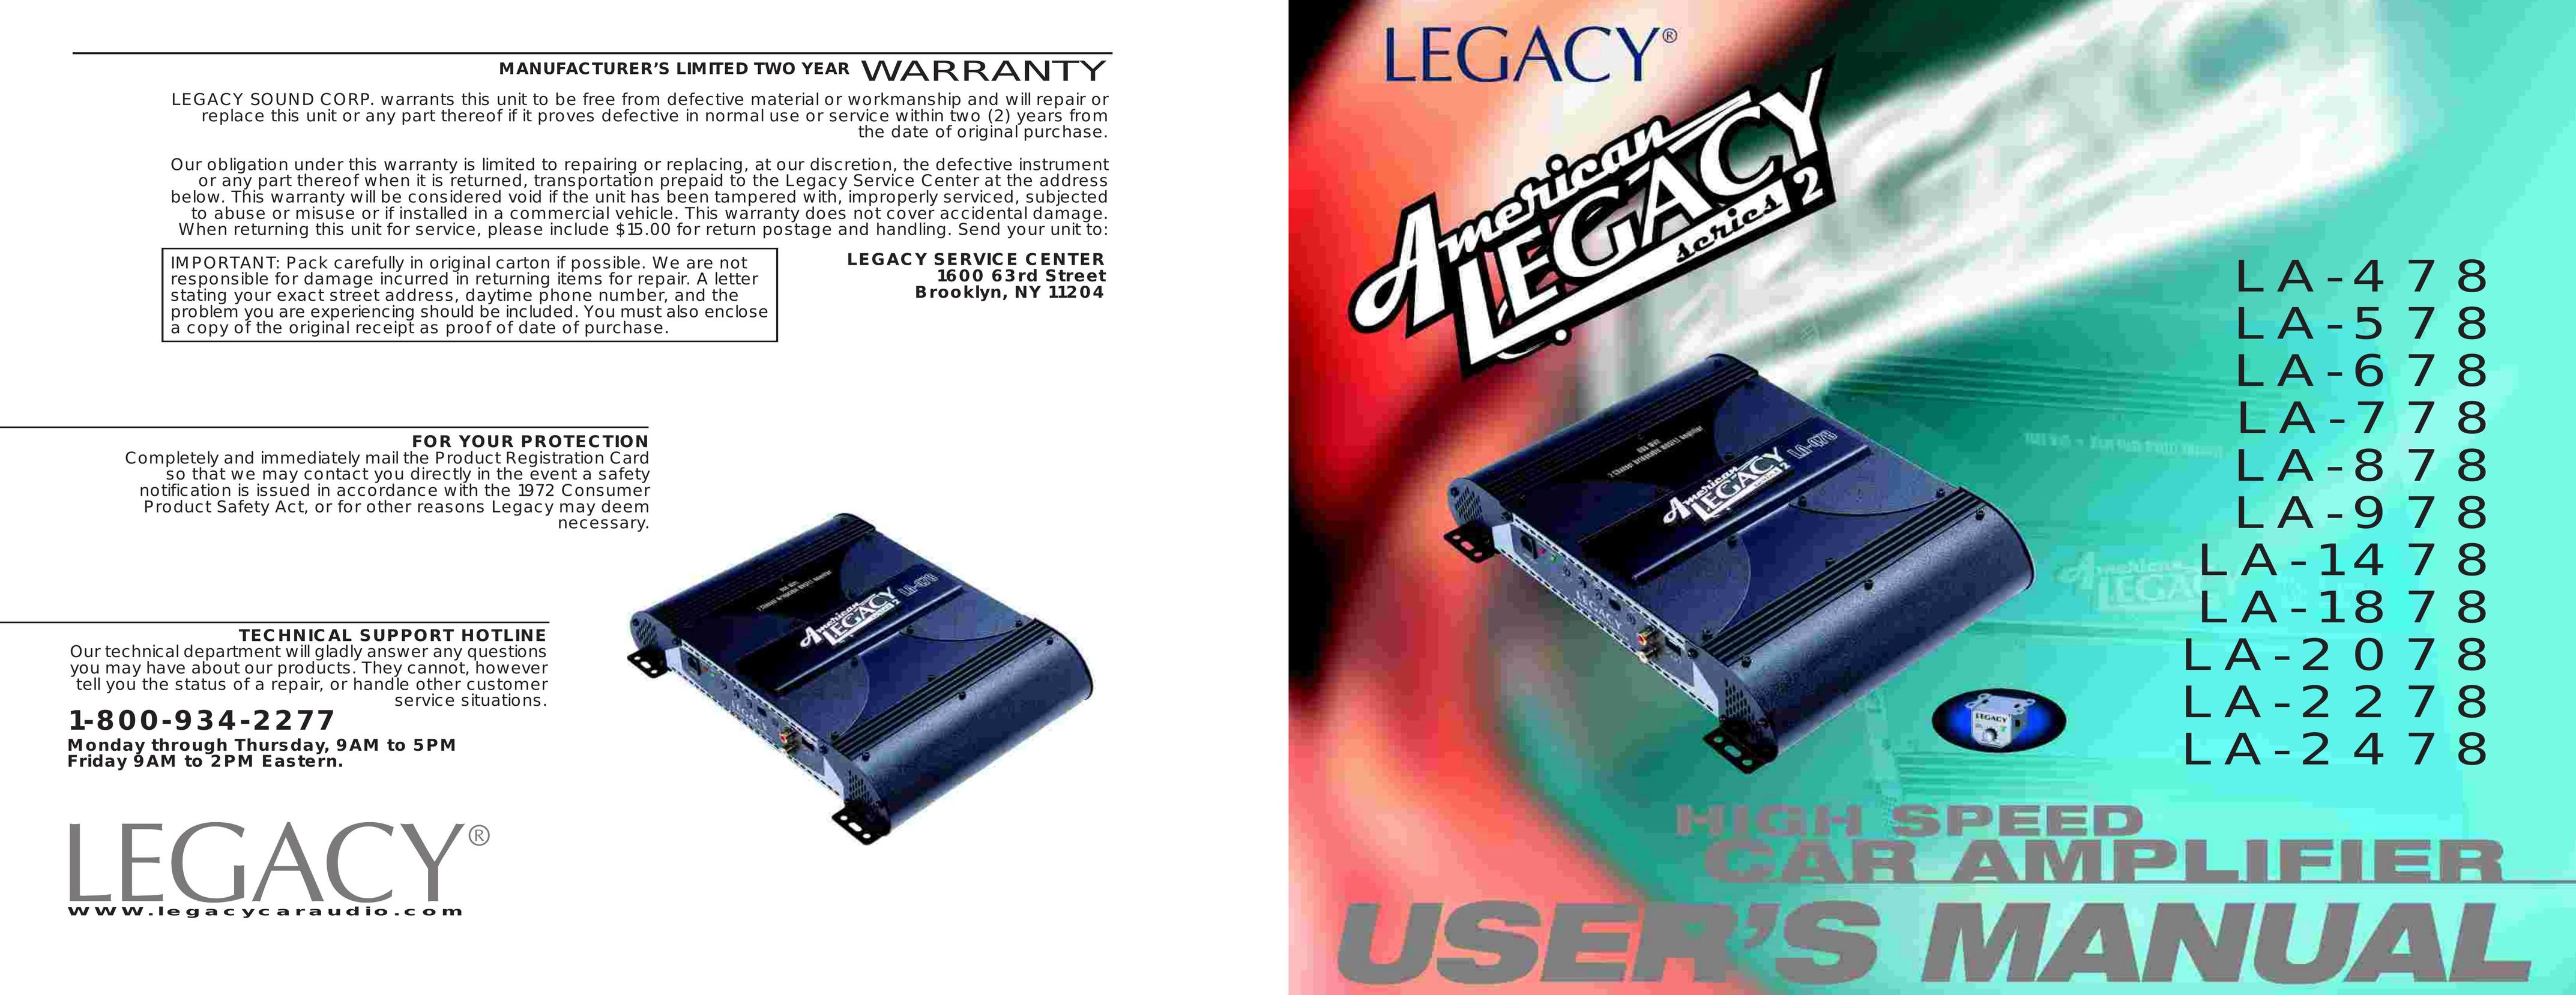 Legacy Car Audio LA-978 Car Amplifier User Manual